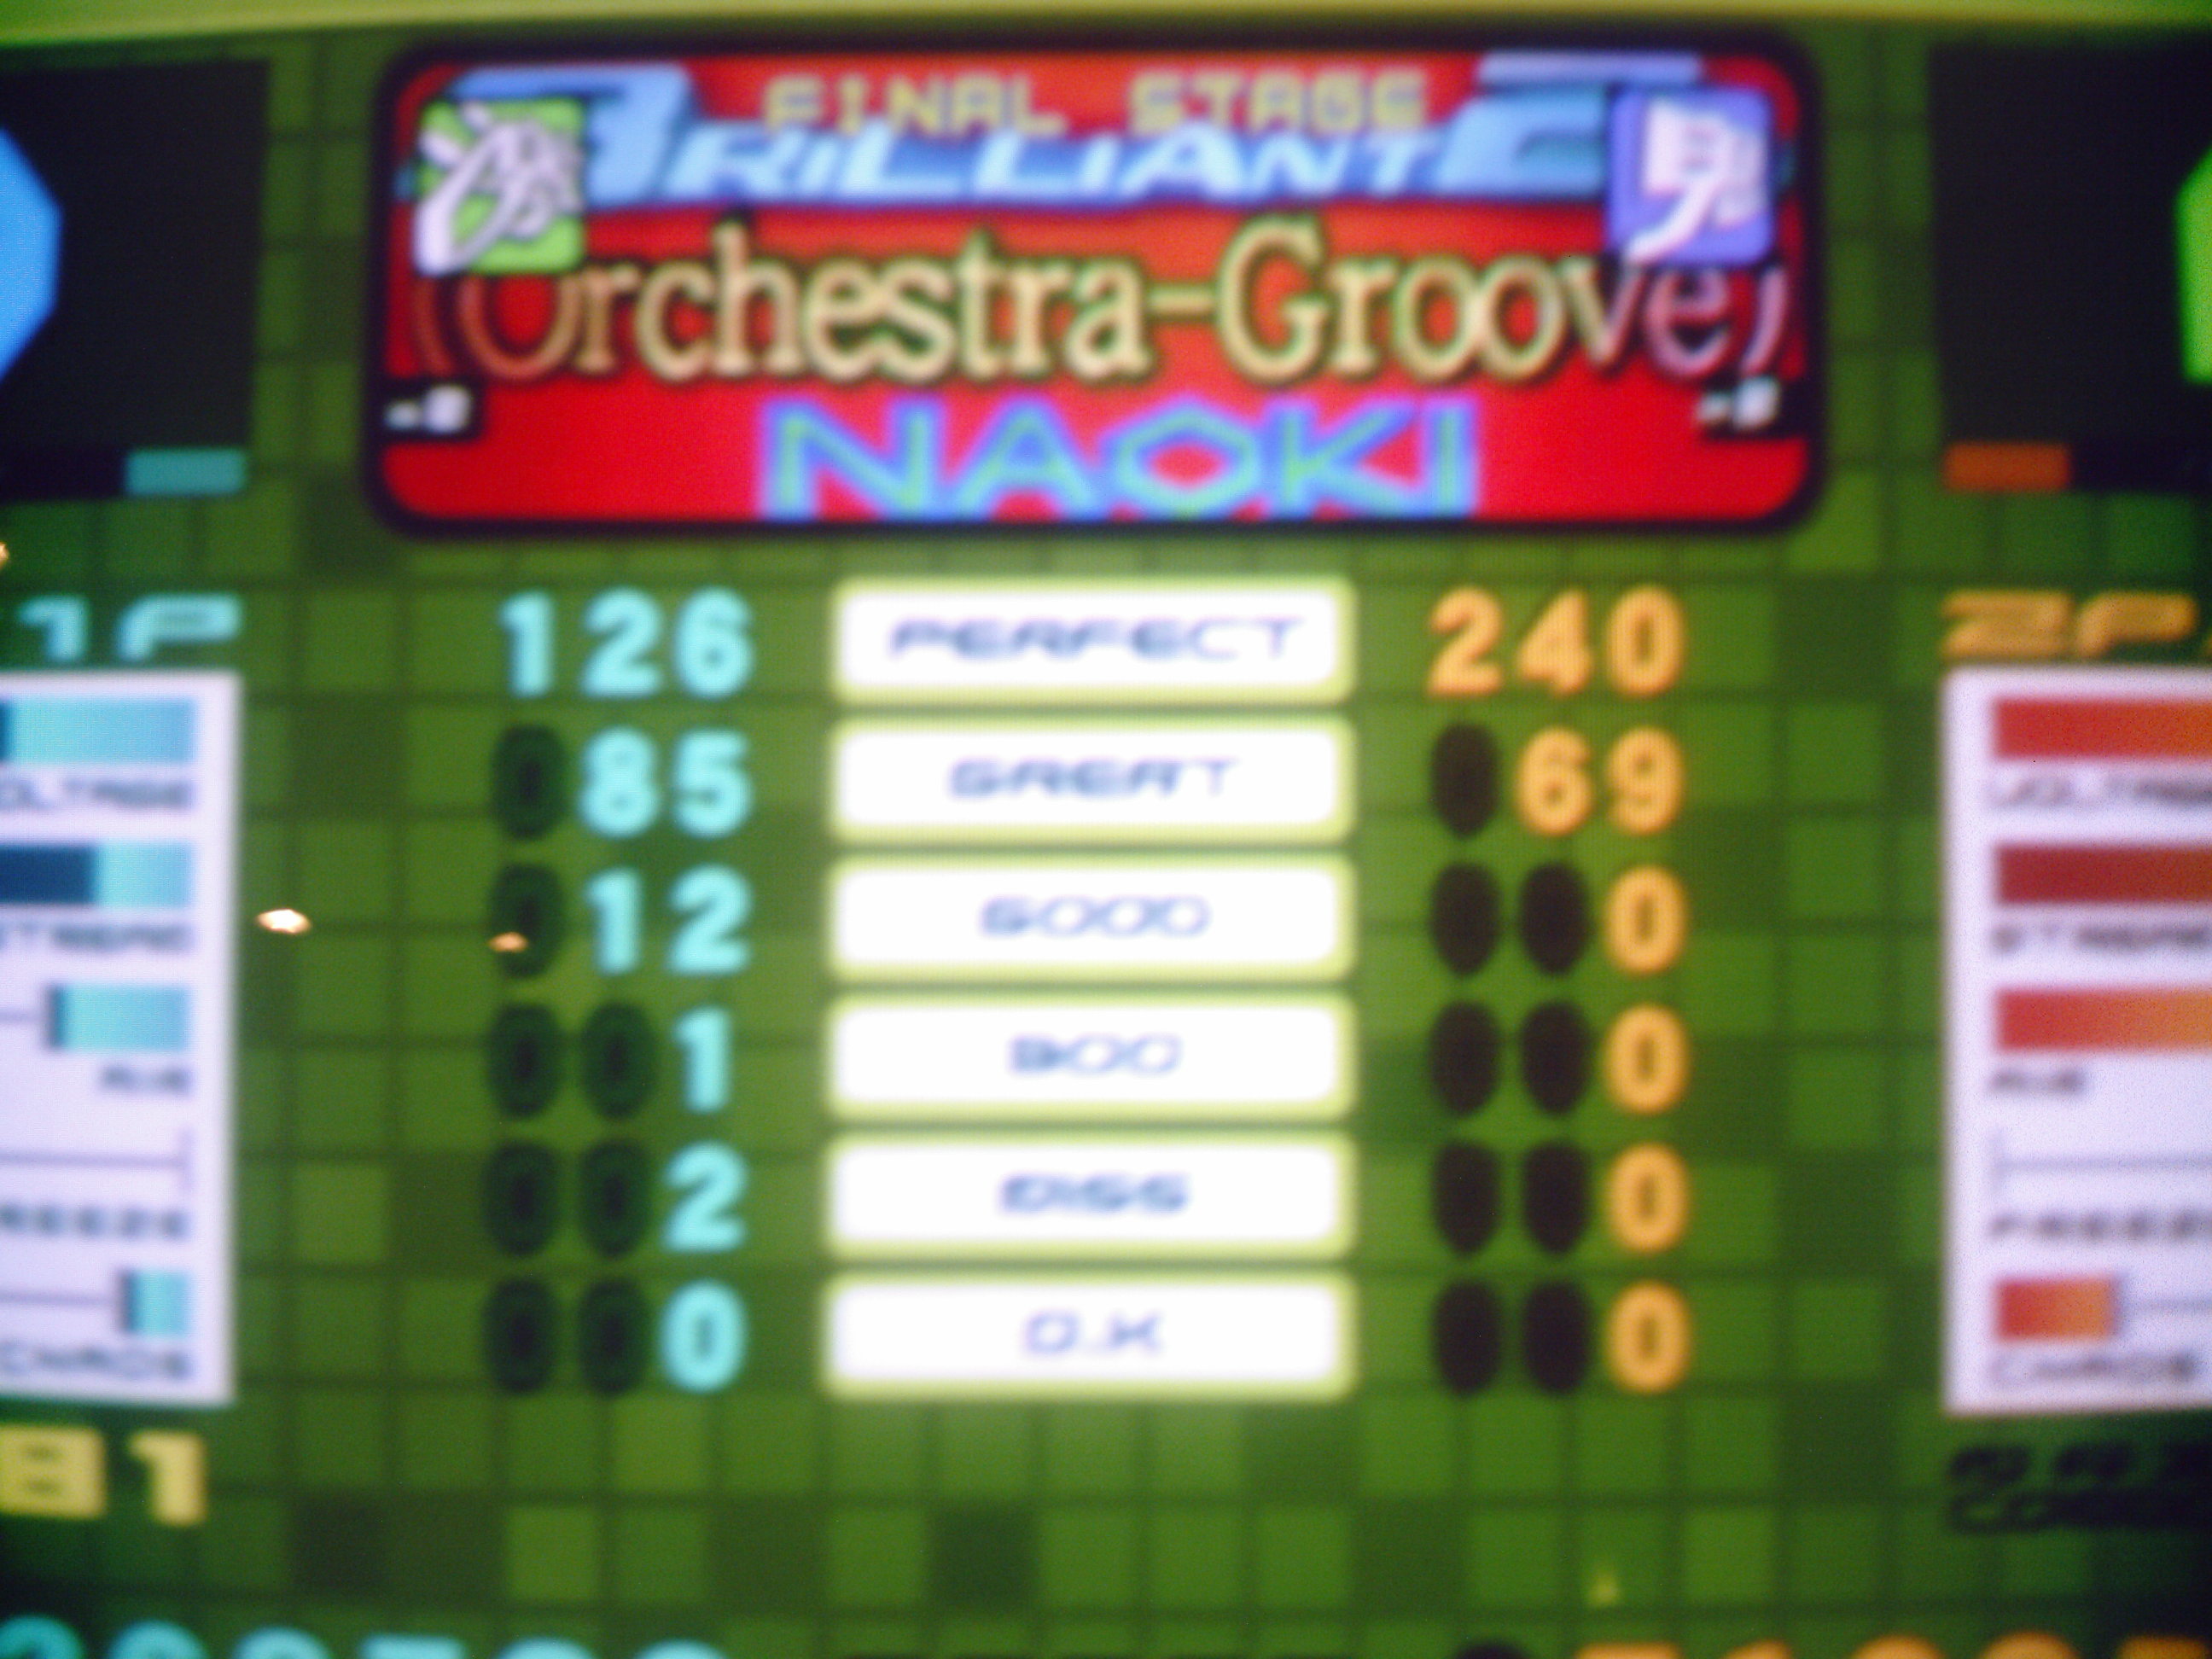 challenge - brilliant2U orchestra groove